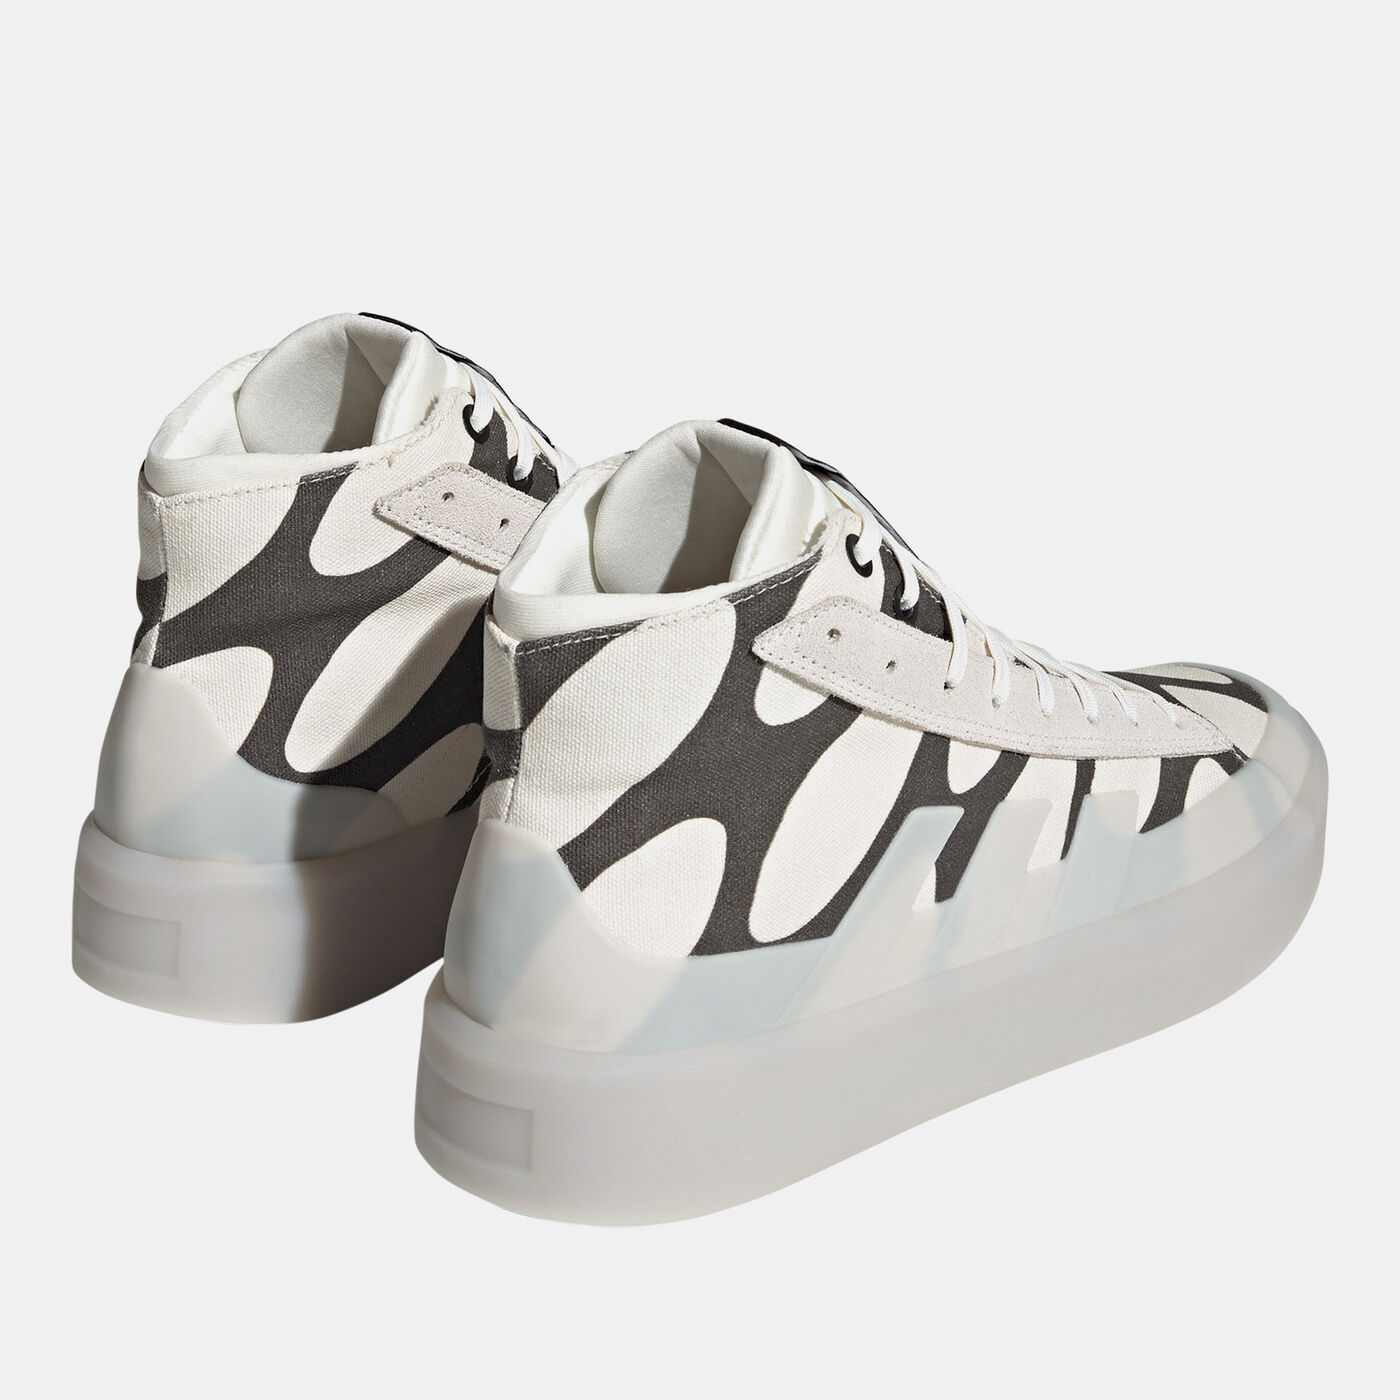 Marimekko x ZNSORED Lifestyle Skateboarding Sportswear Capsule Collection Shoe